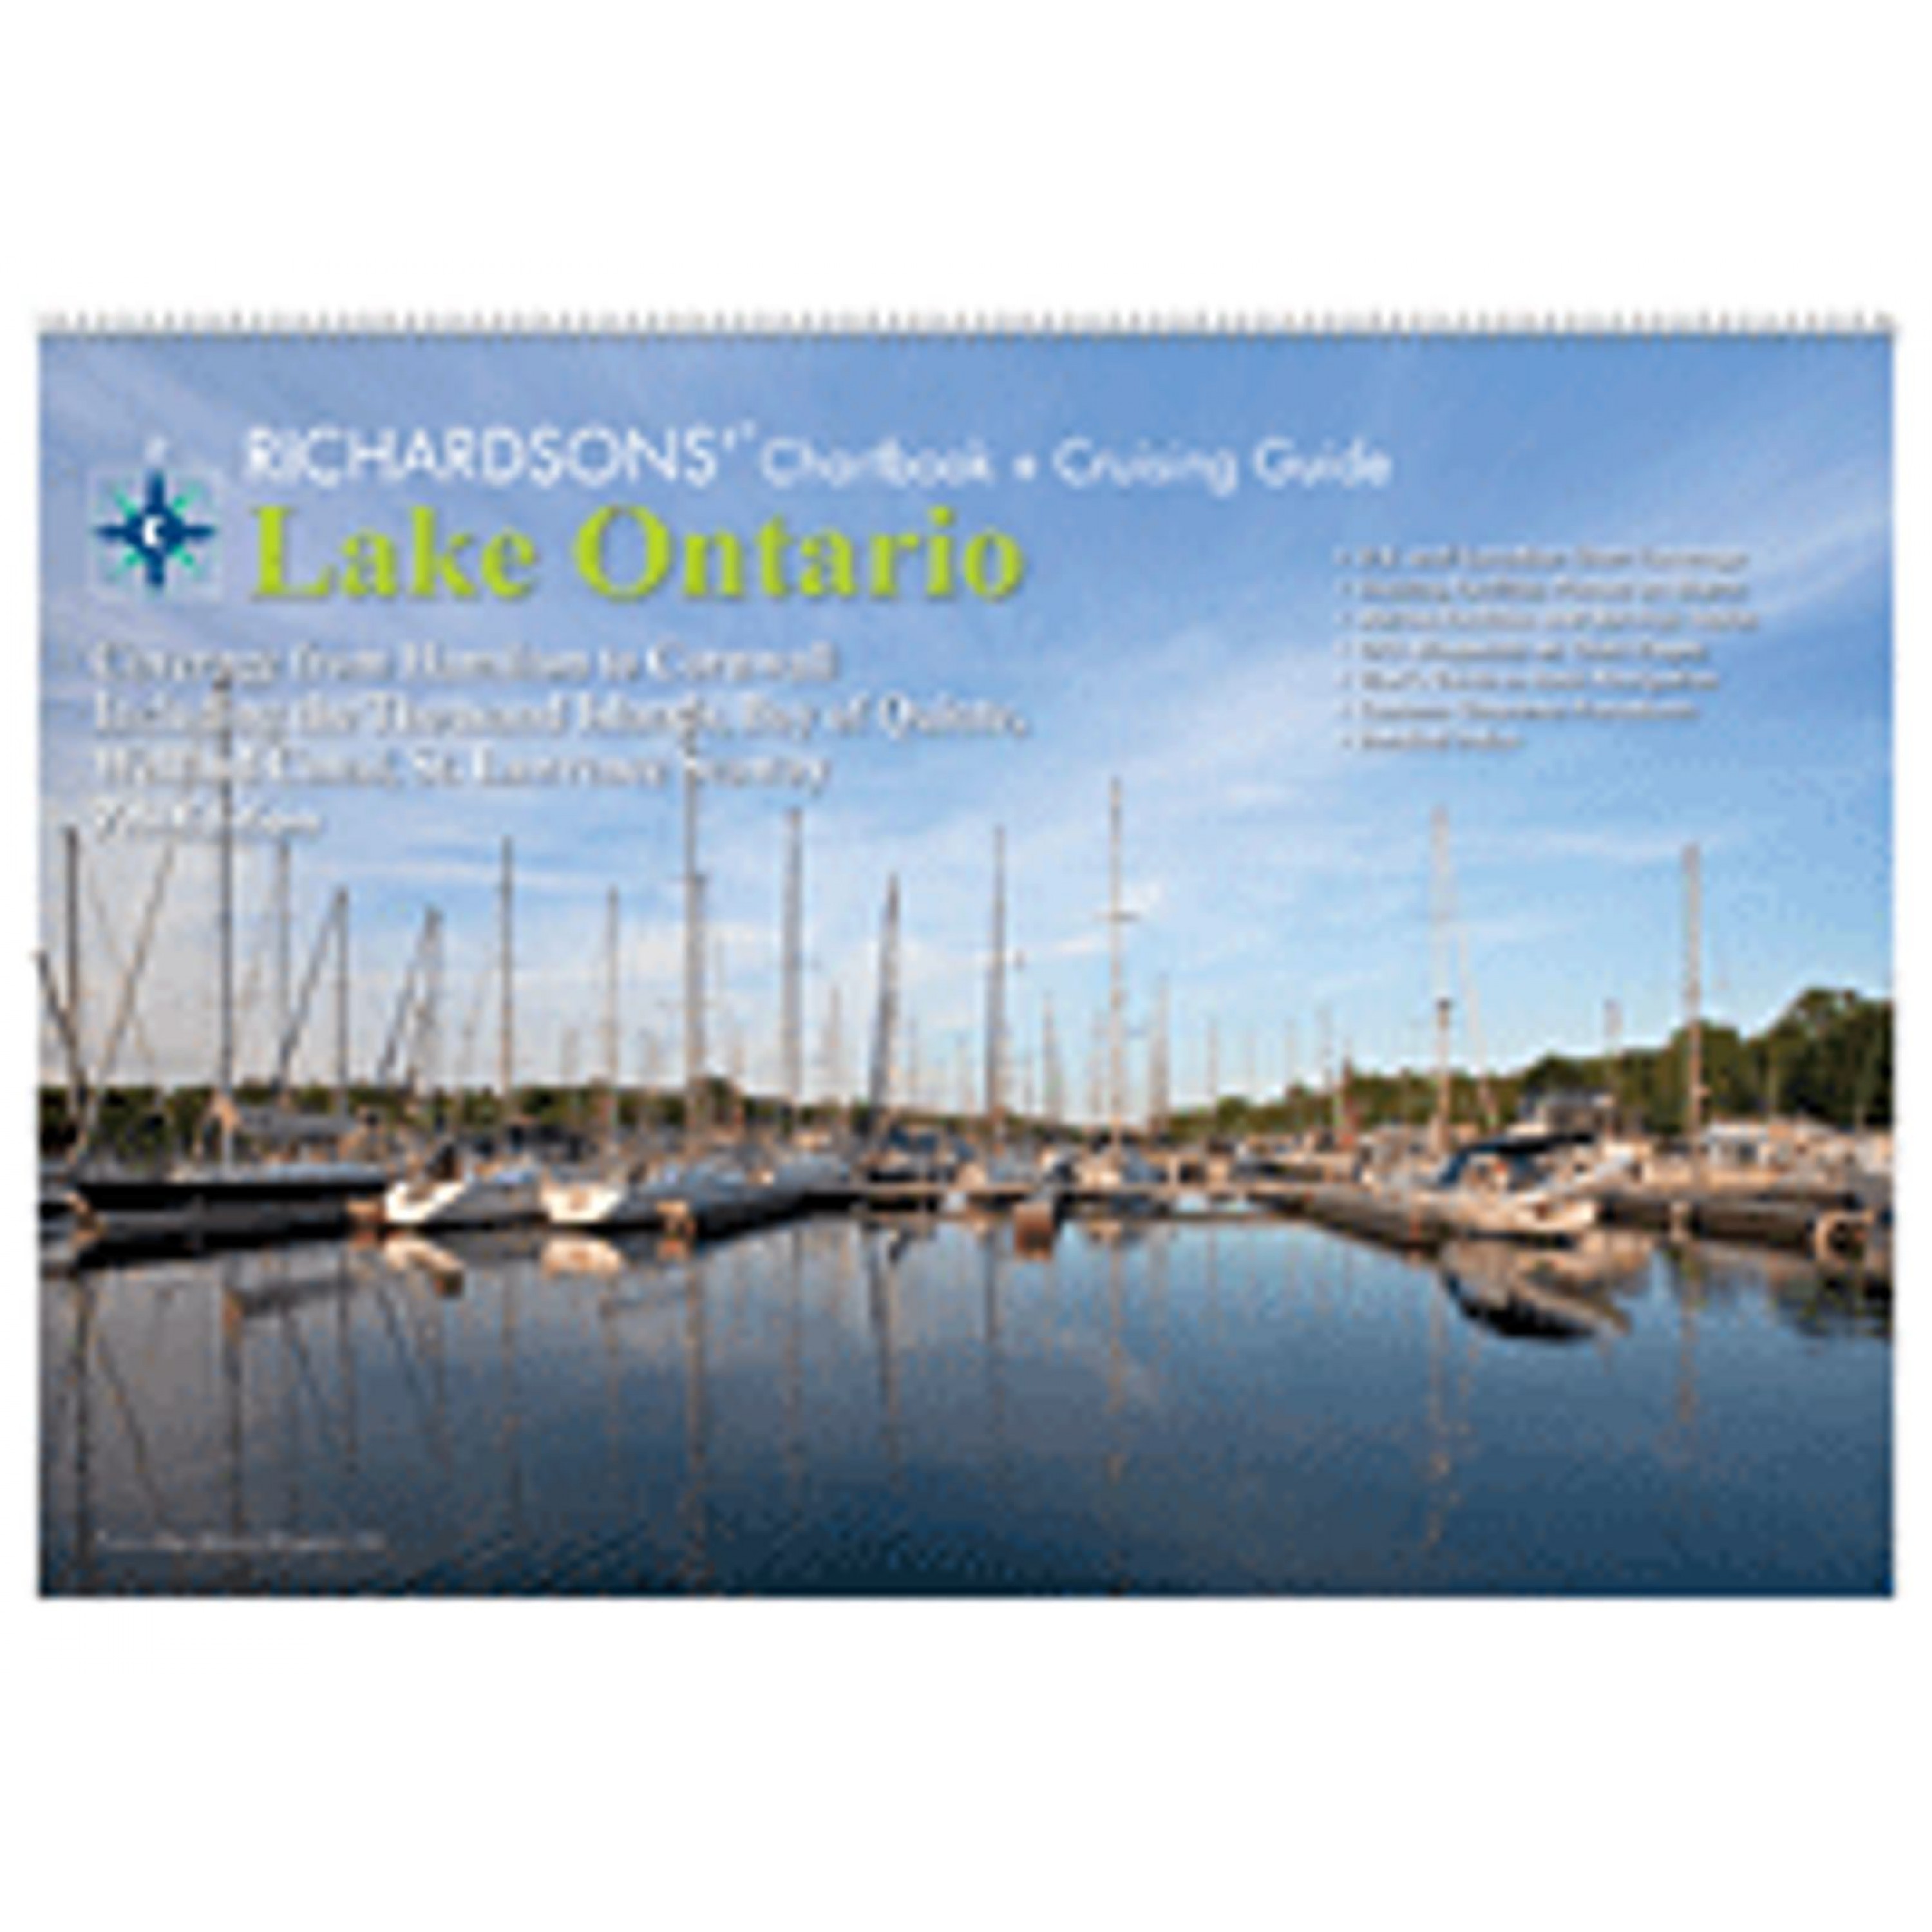 CHARTBOOK LAKE ONTARIO RICHARDSONS 7TH EDITION